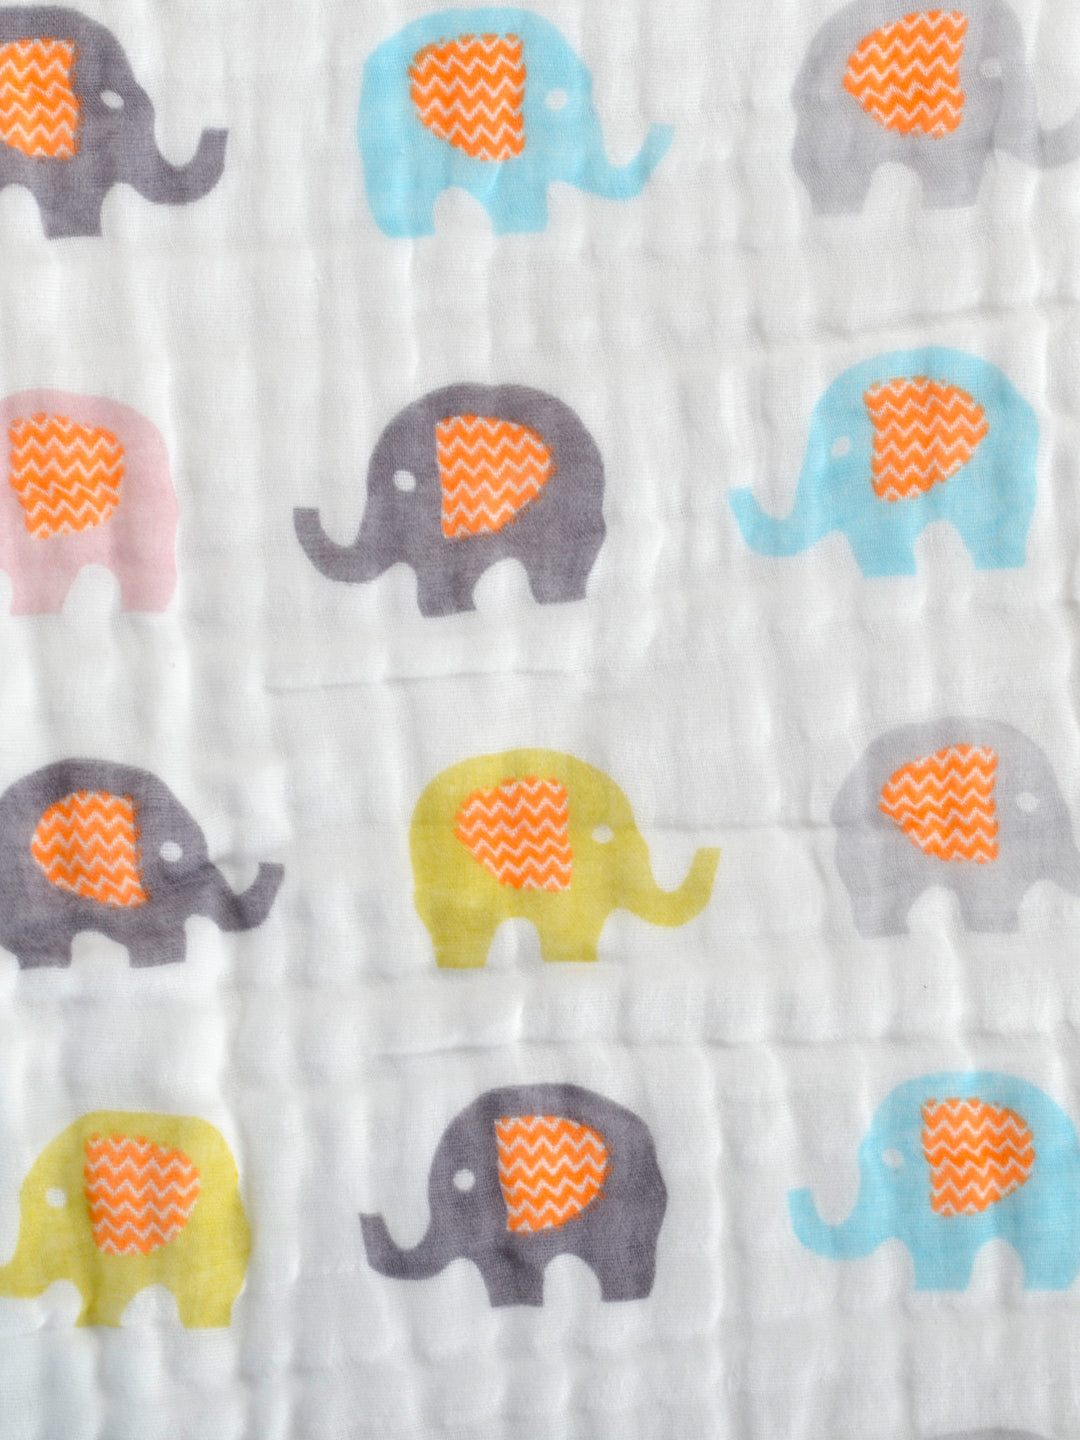 Baby Muslin 6 Layer Muslin blanket Cum Towel -100 x100 cm - 0-3 Years - Elephant